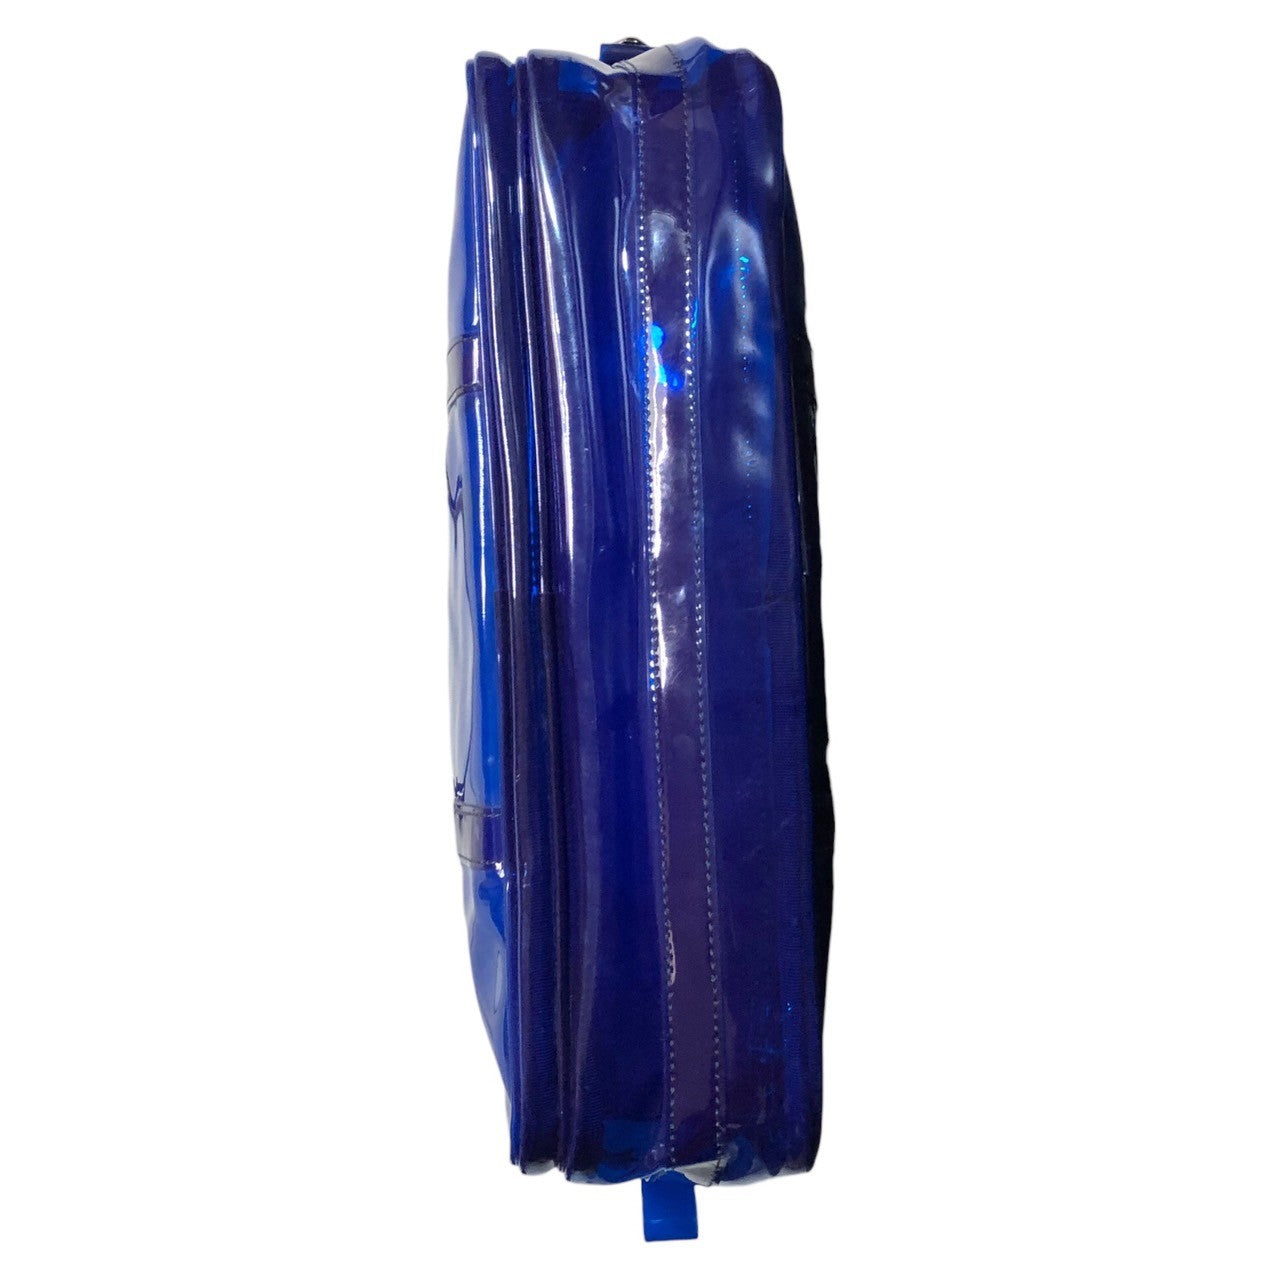 COMME des GARCONS(コムデギャルソン) clear school bag クリア スクール バッグ CO-K 001 ブルー 半透明 ハンドバッグ 塩化ビニール アーカイブ